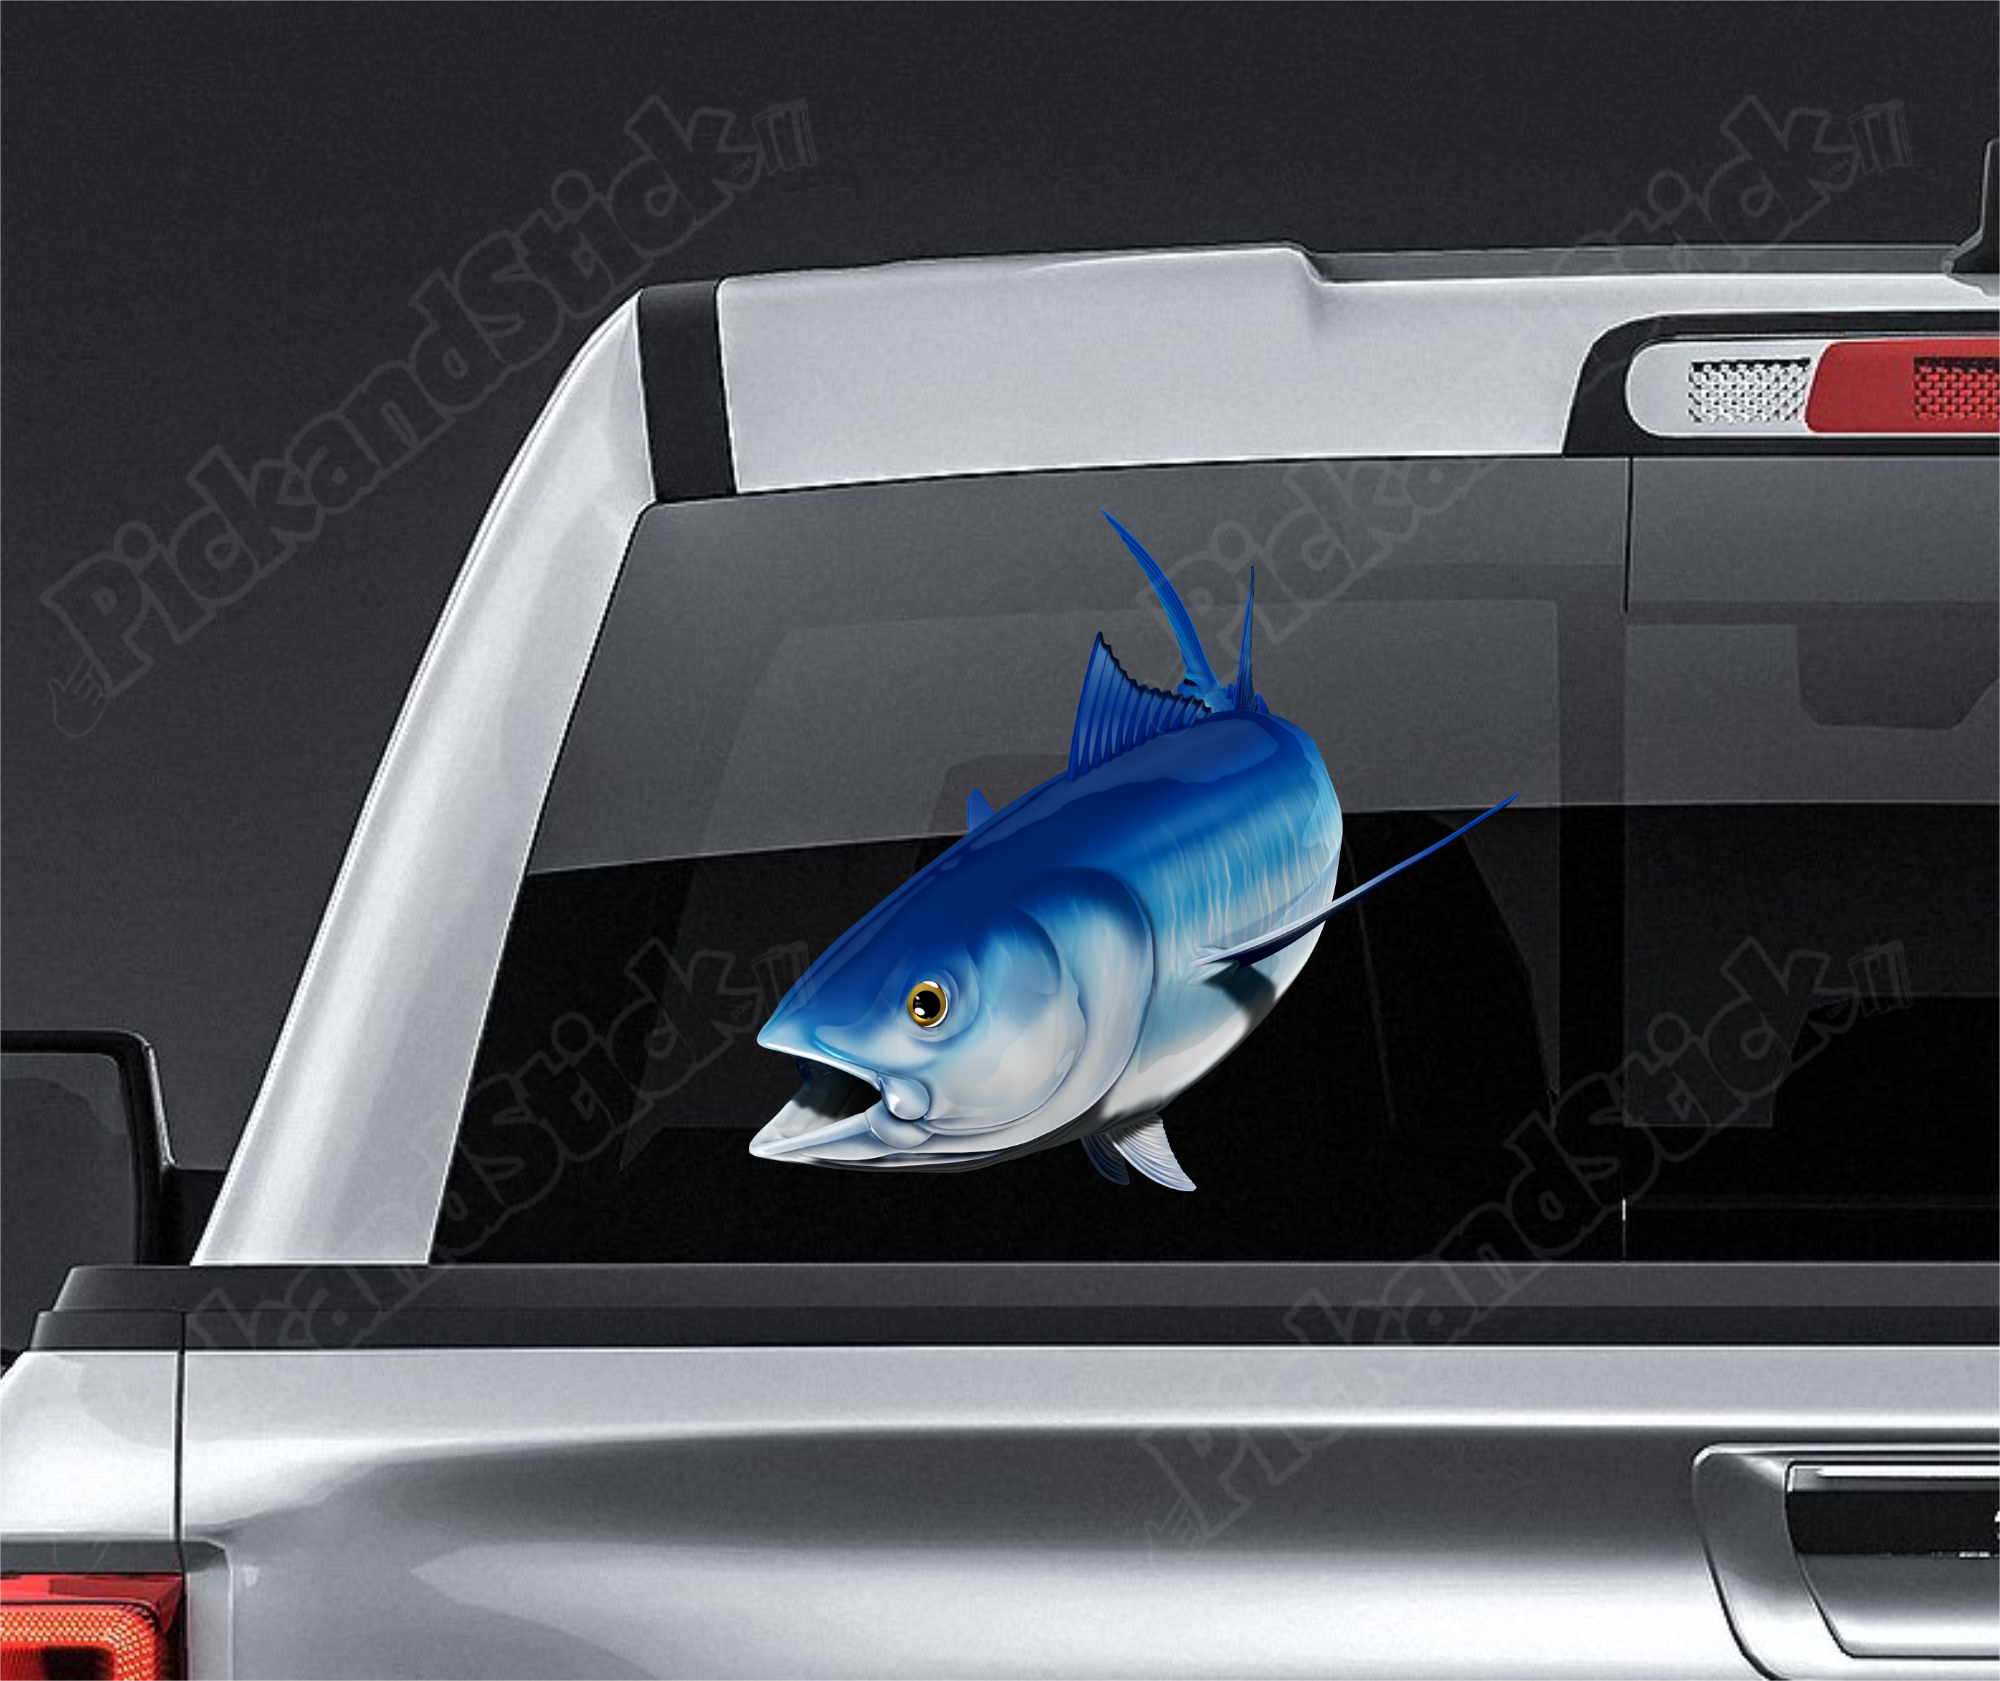 Bluefin Fish Decal - PickandStickcom